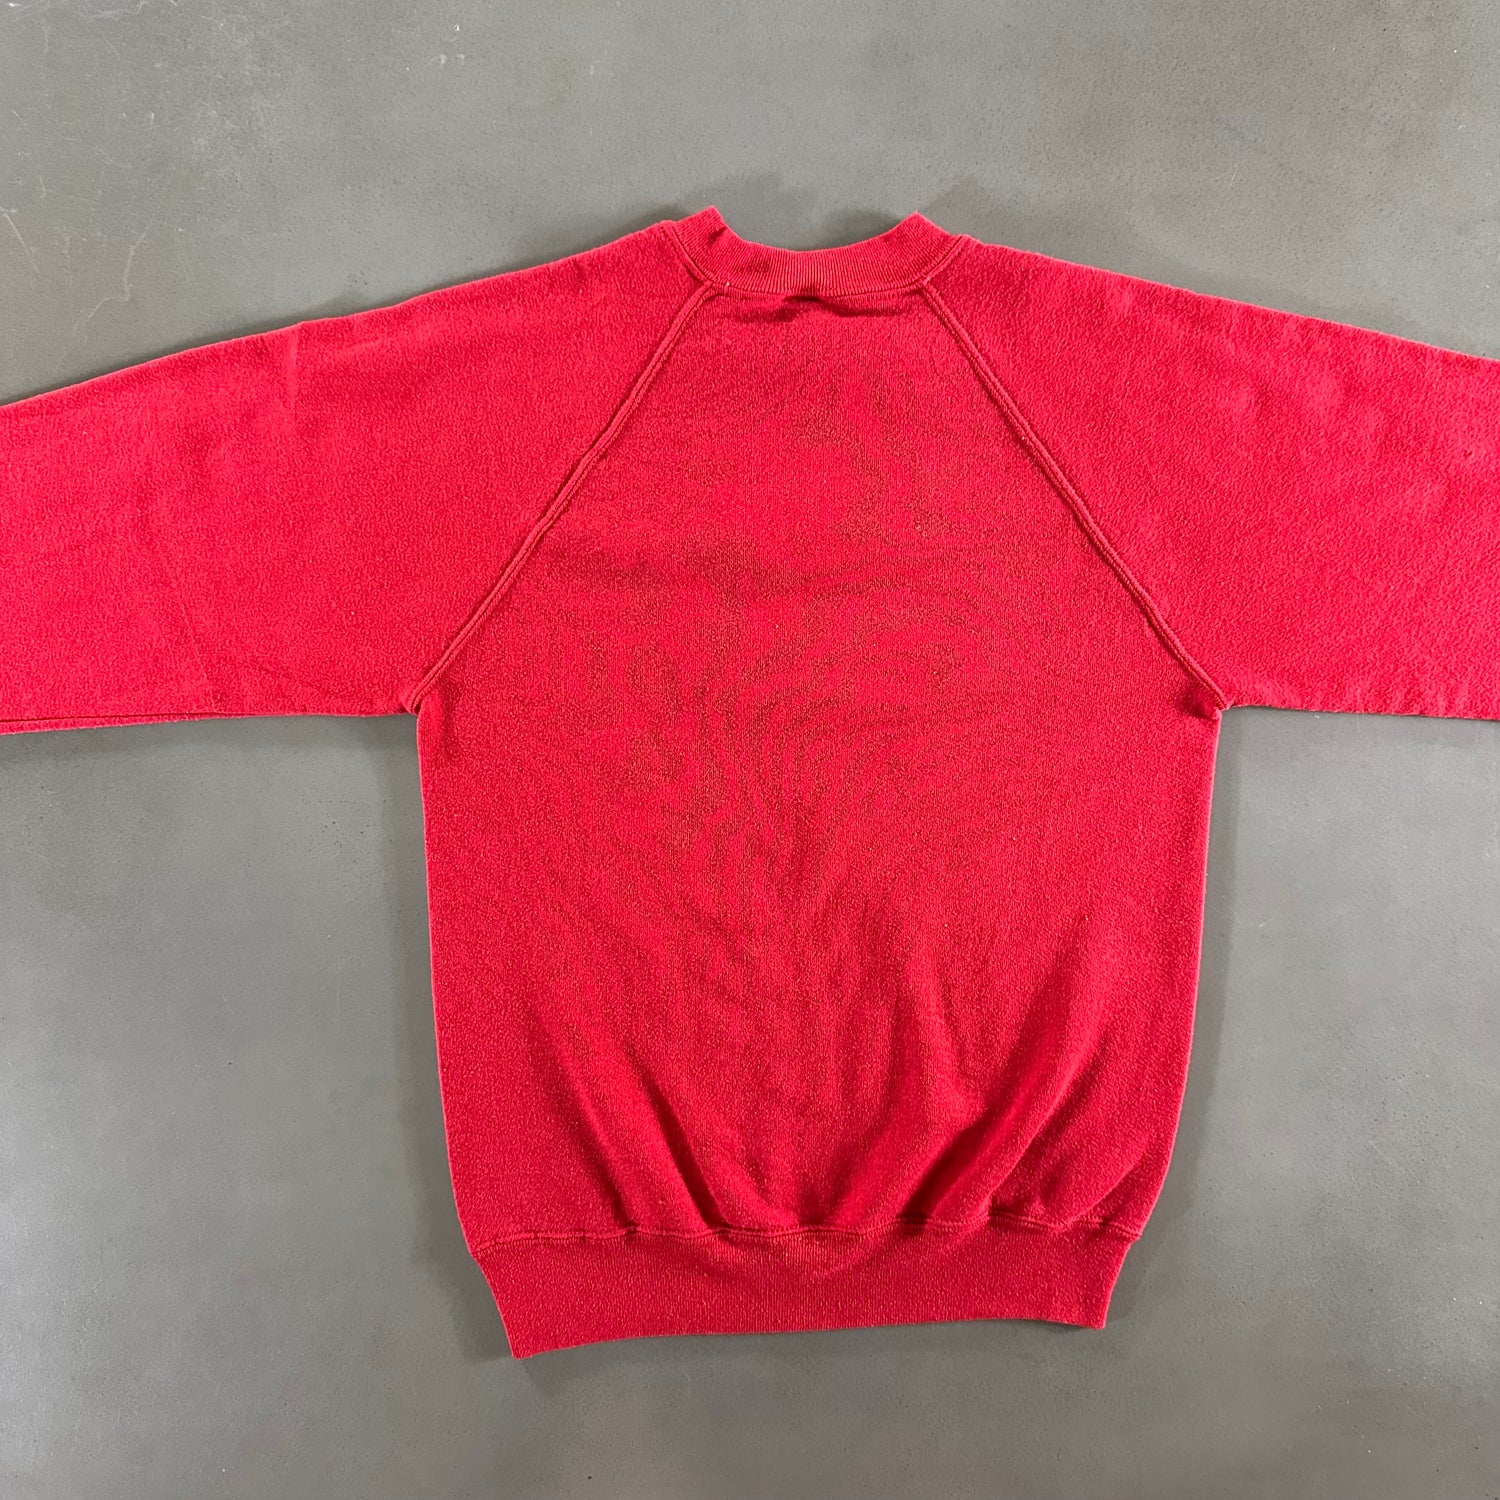 Vintage 1980s Holiday Bear Sweatshirt size Medium